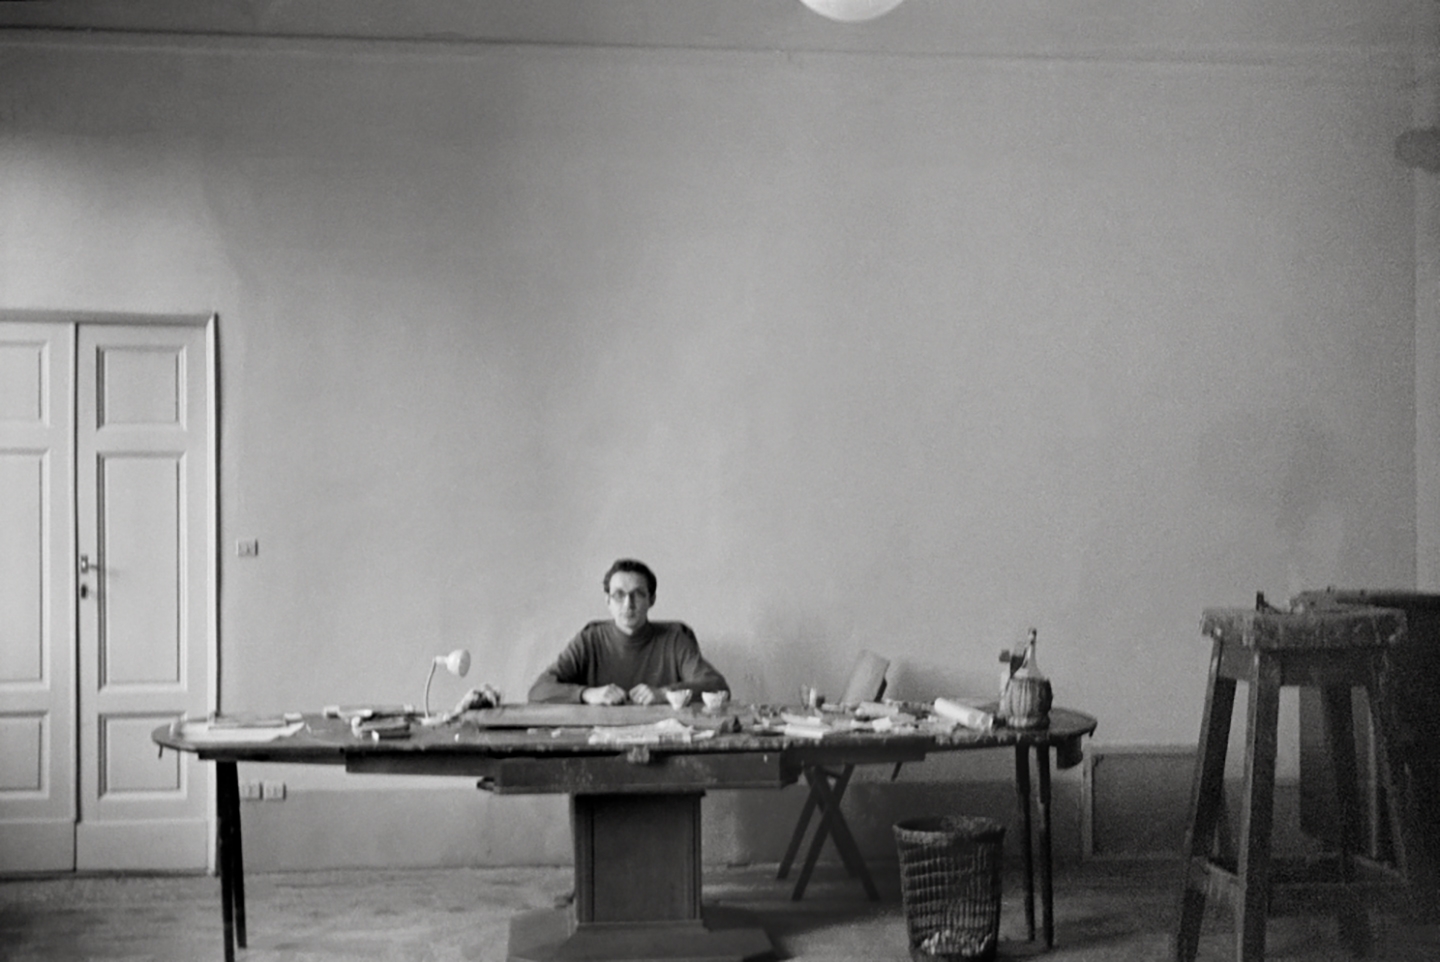 Georg Baselitz in Villa Romana, Florence. 1965

Courtesy: Elke Baselitz